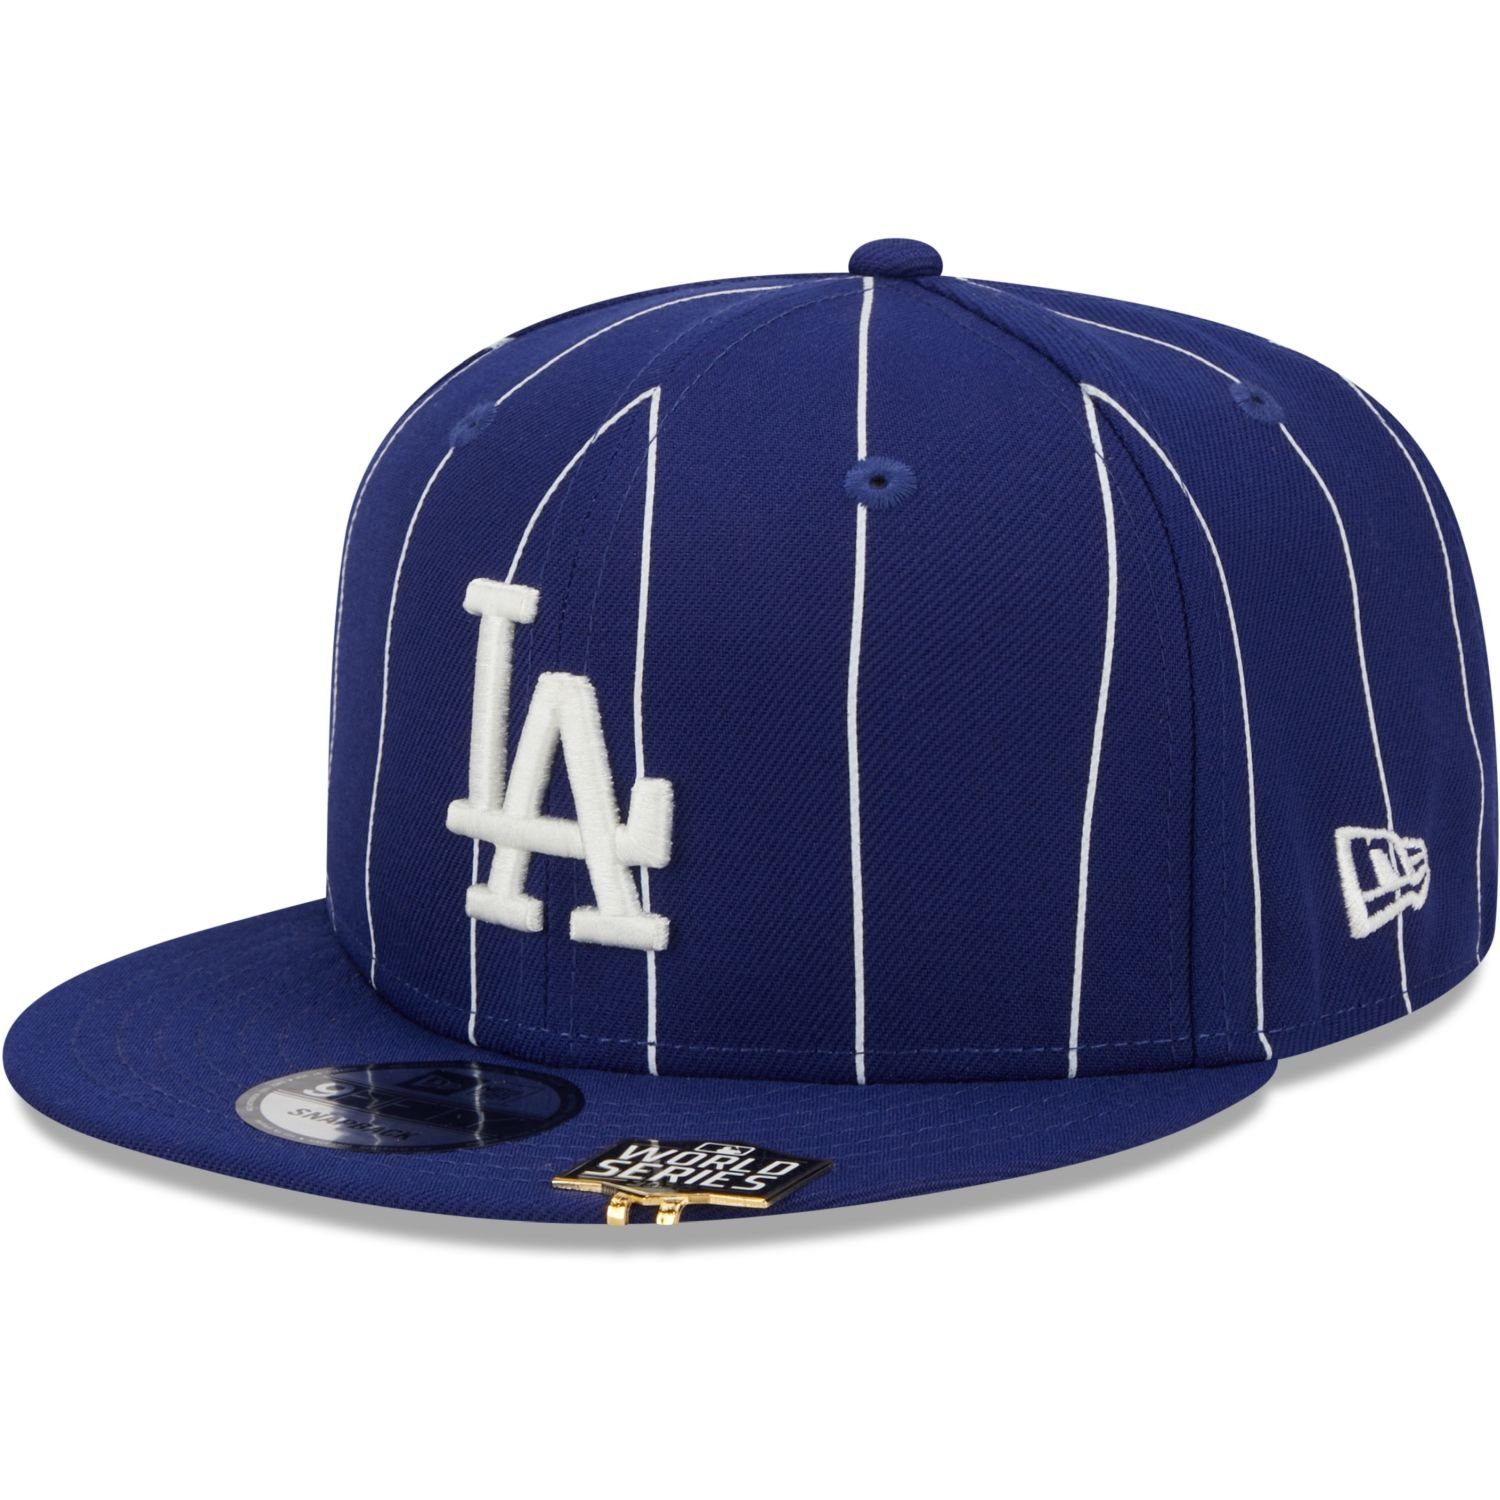 New PINSTRIPE 9Fifty Era Cap Los Angeles Dodgers Snapback